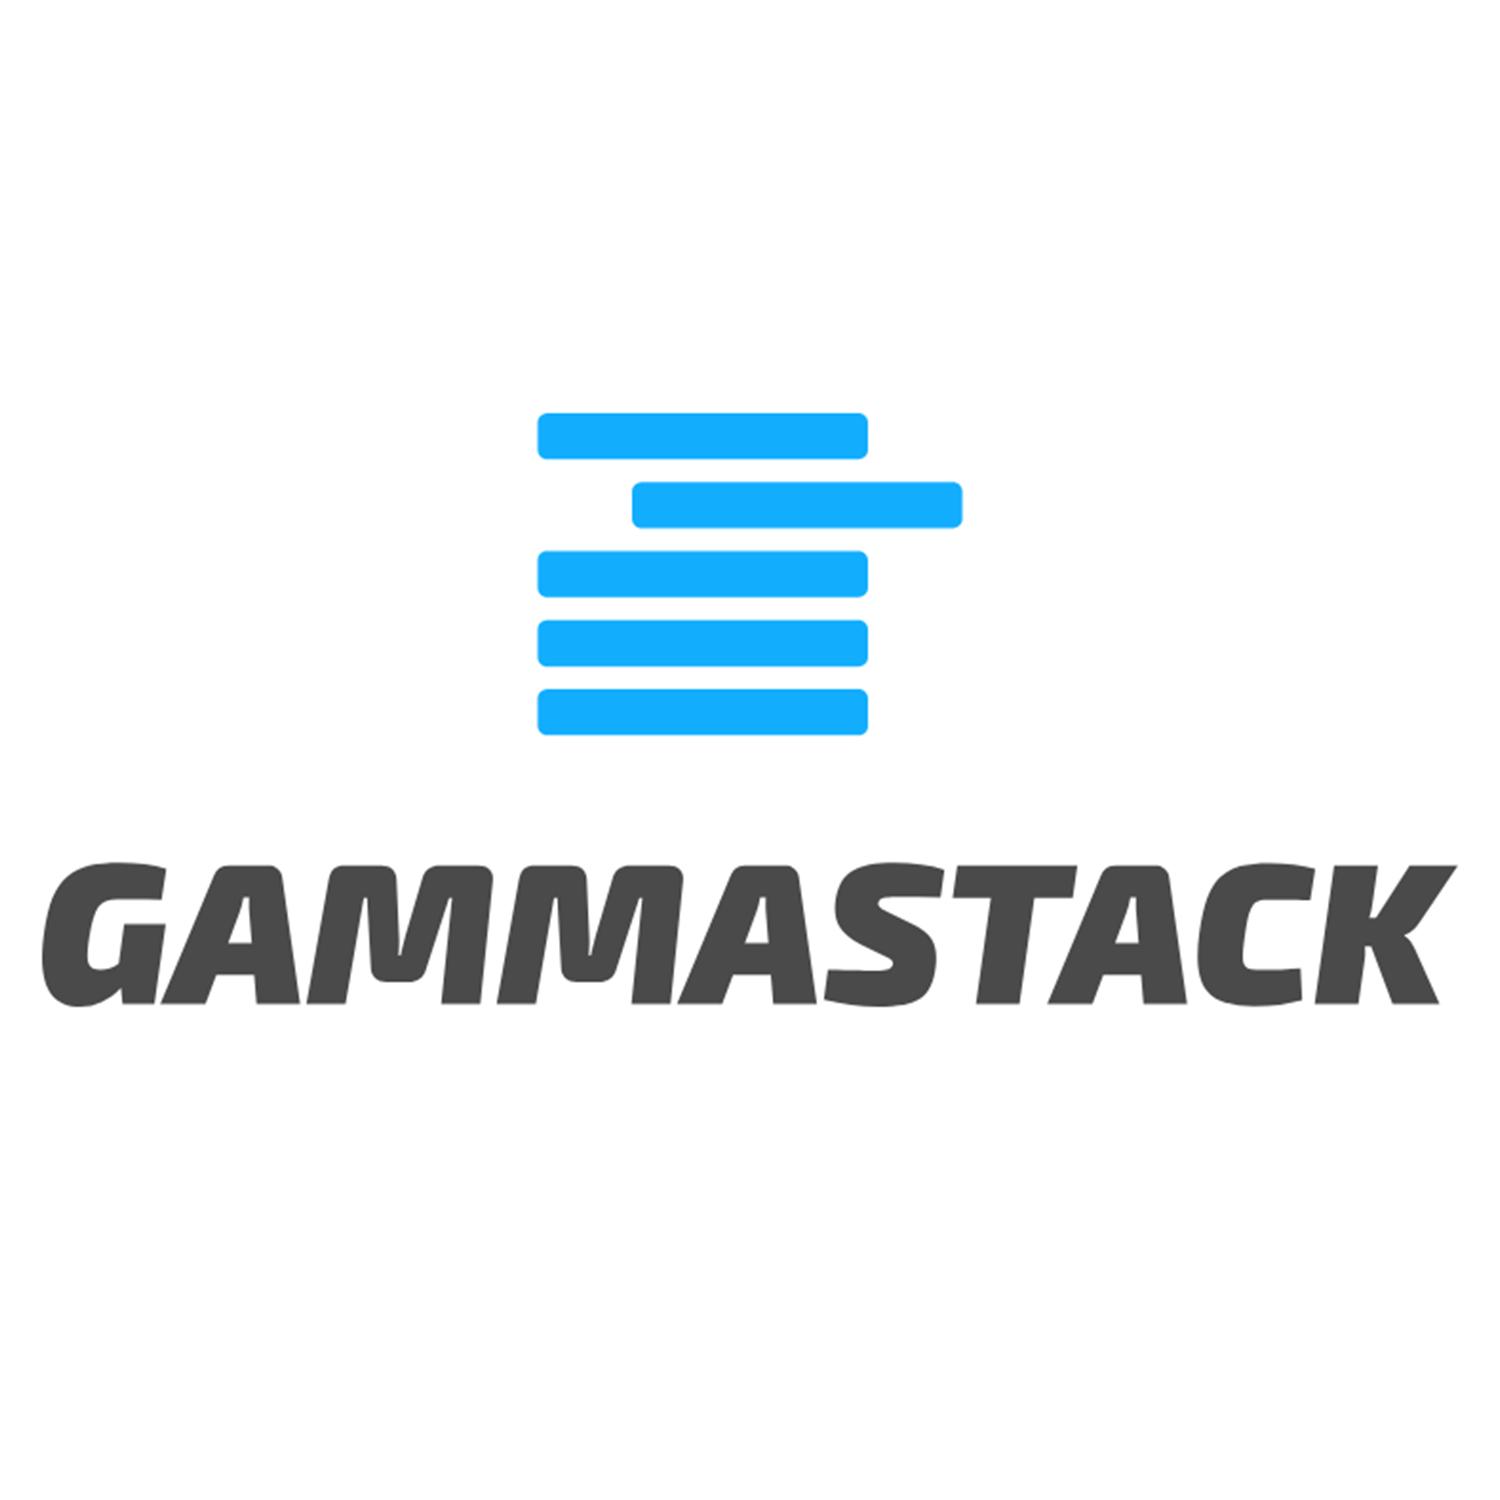 GammaStack profile on Qualified.One